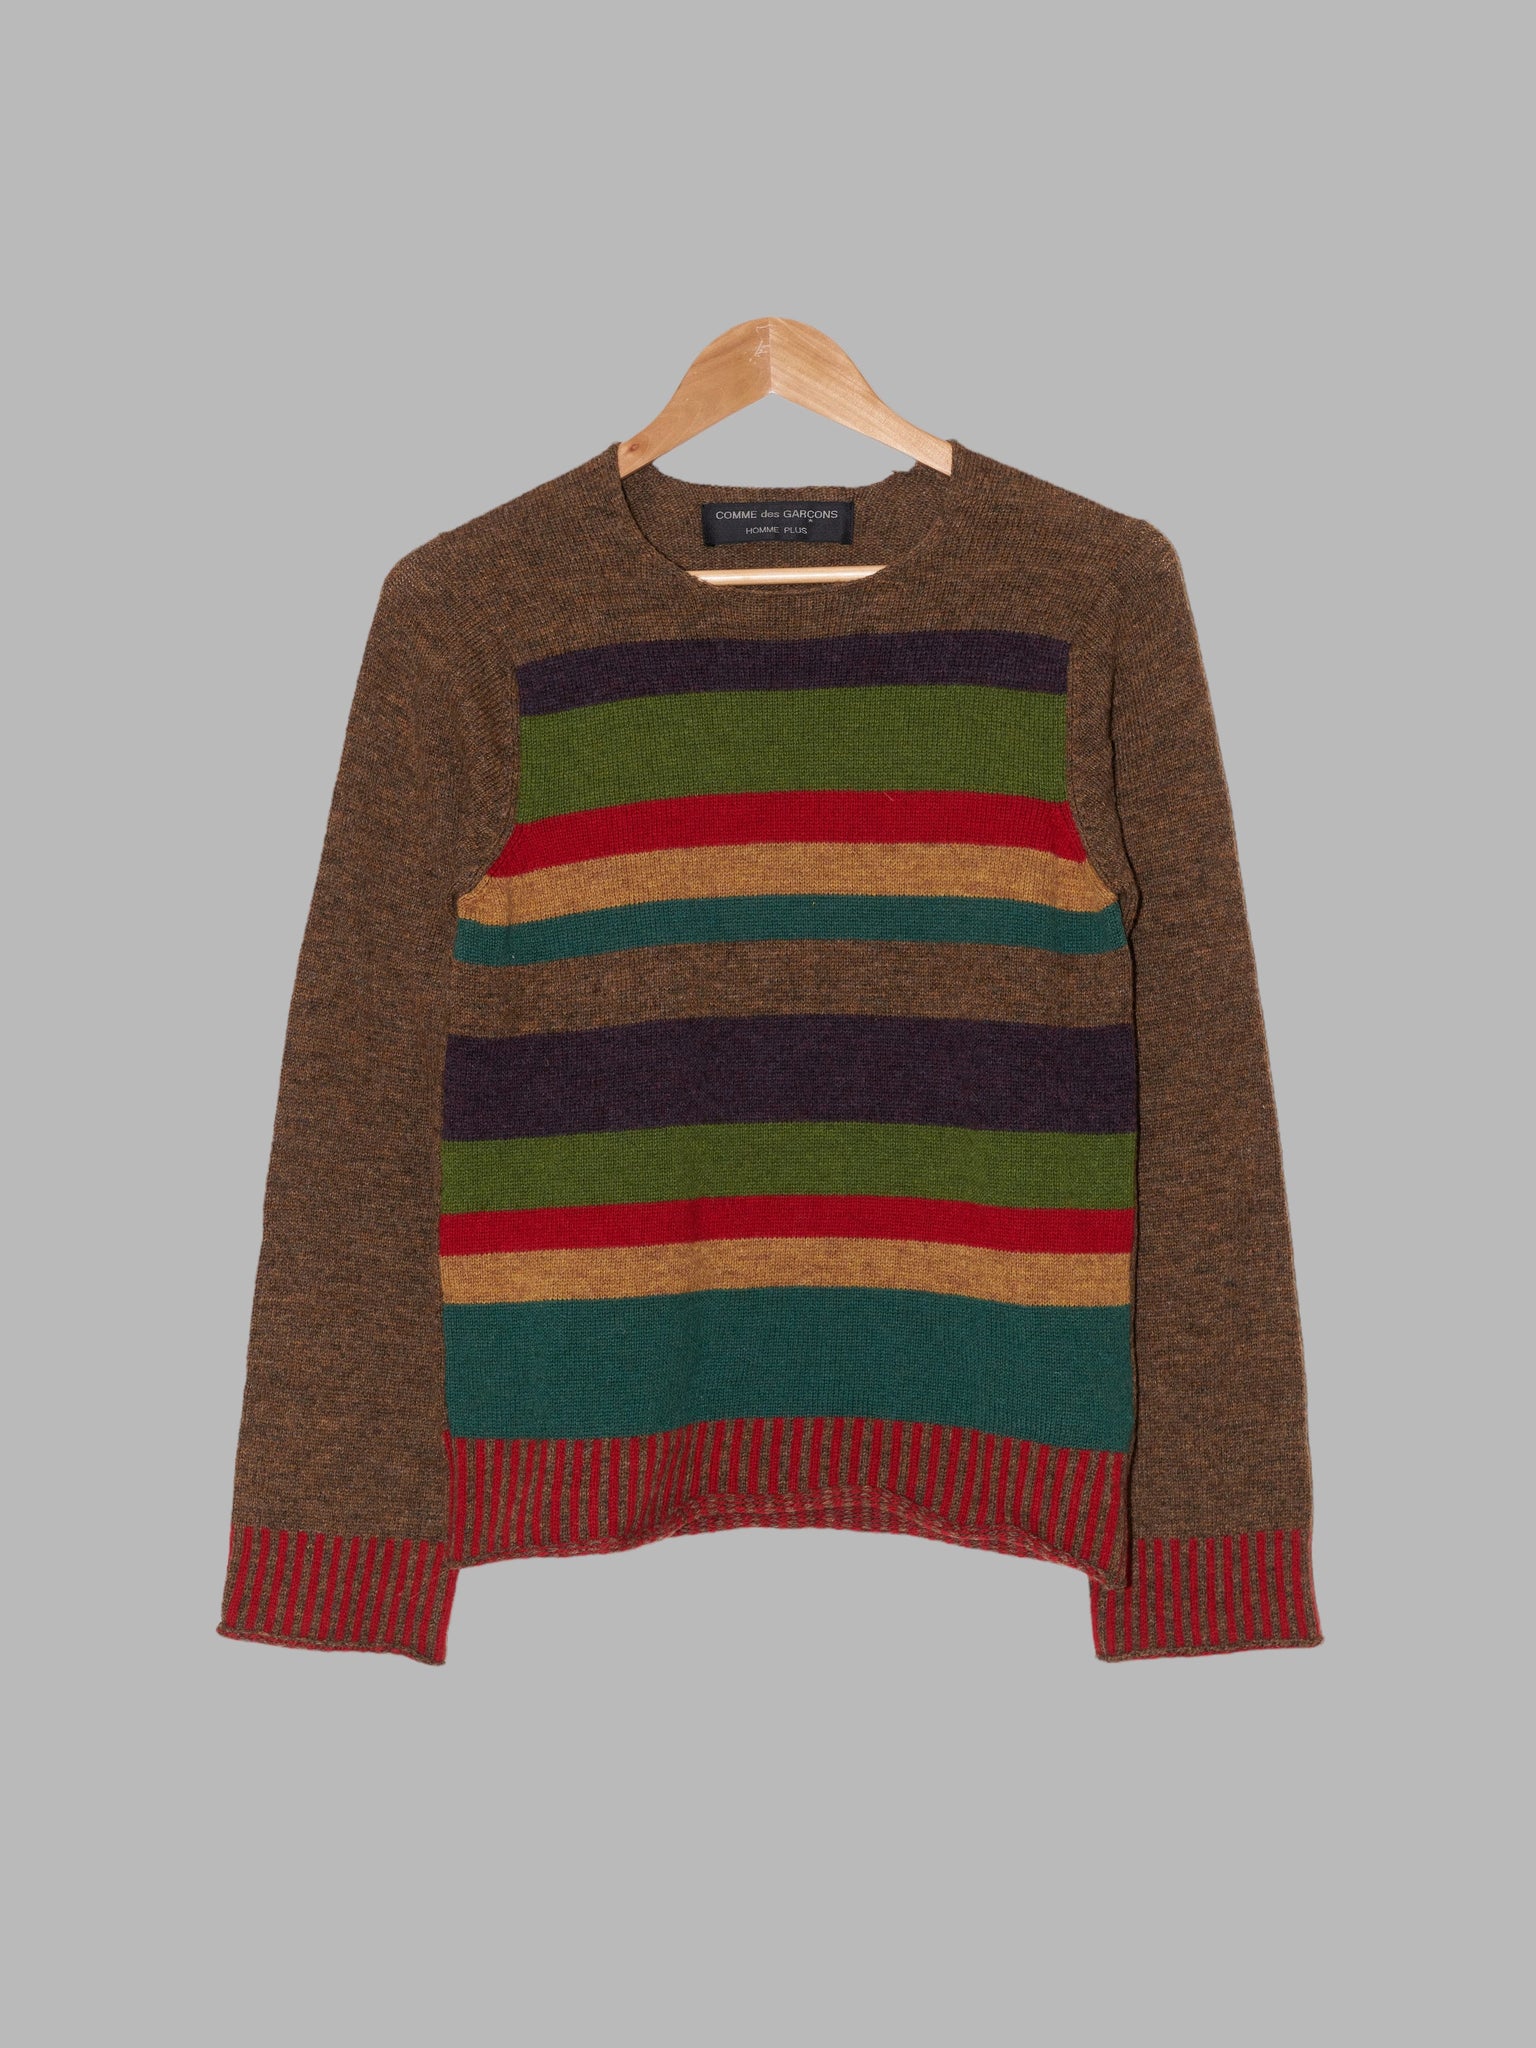 Comme des Garcons Homme Plus AW1996 brown multicolour striped wool jumper